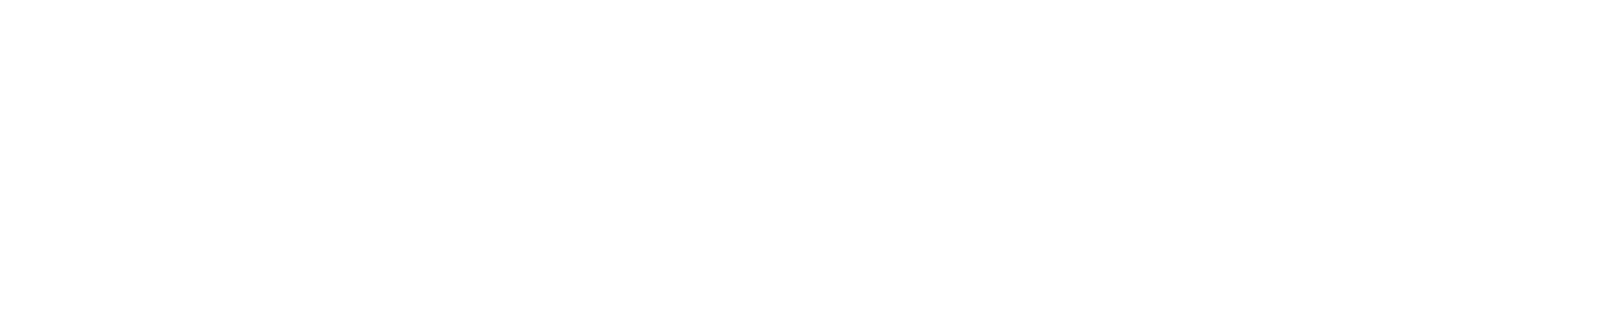 Interborough Developmental & Consultation Center